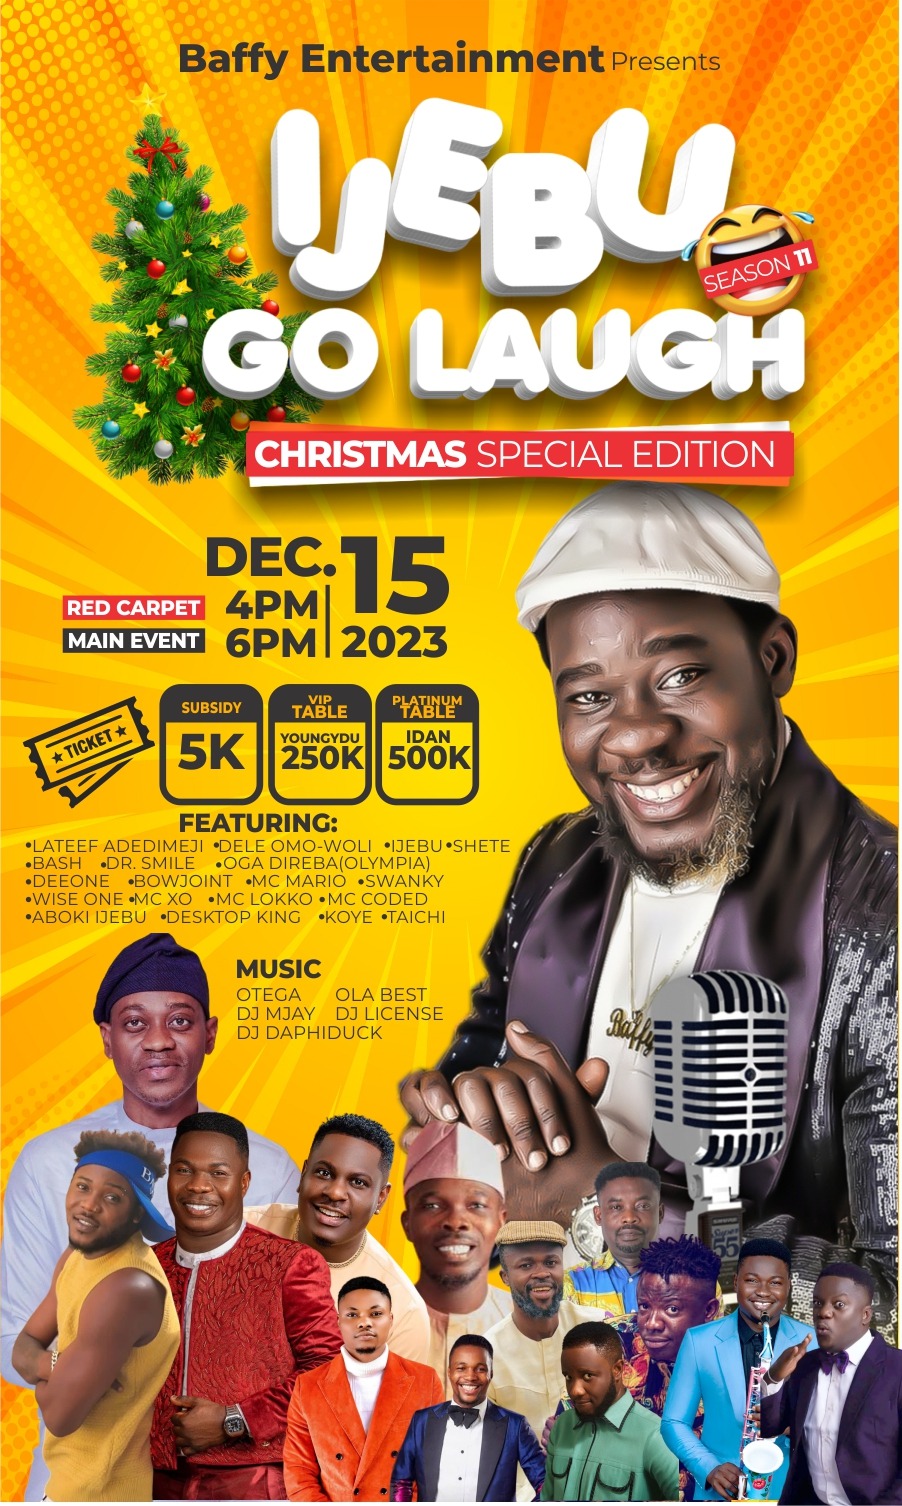 AdeDimeji Lateef, Dele omo Woli , Bash , Other A-list Comedians storm ijebu for Mc Baffy’s Ijebu Go Laugh ’23 Edition*